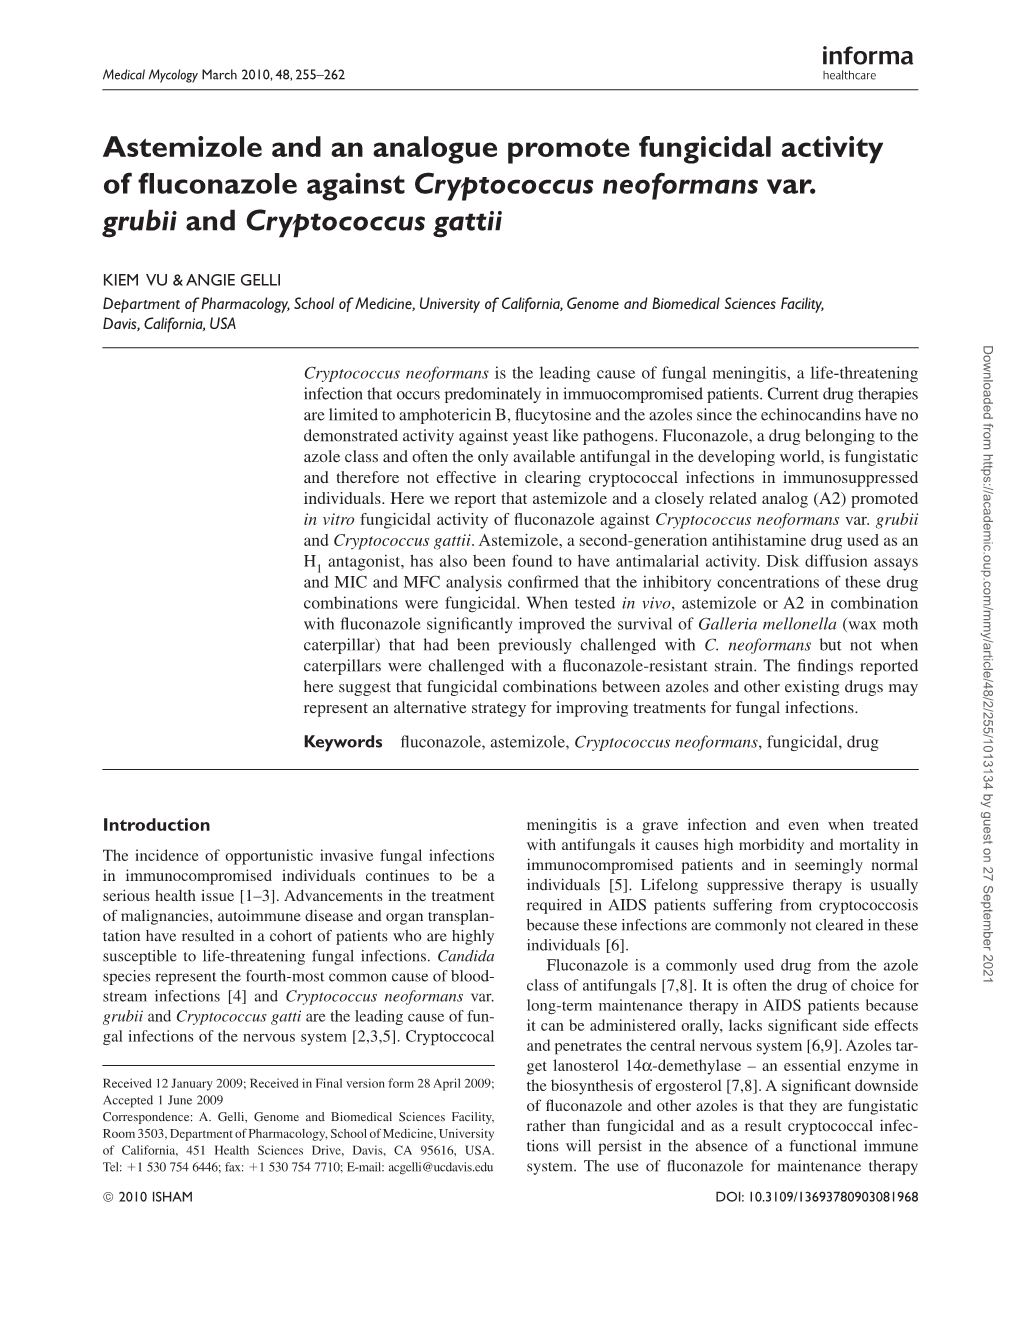 Astemizole and an Analogue Promote Fungicidal Activity of Fluconazole